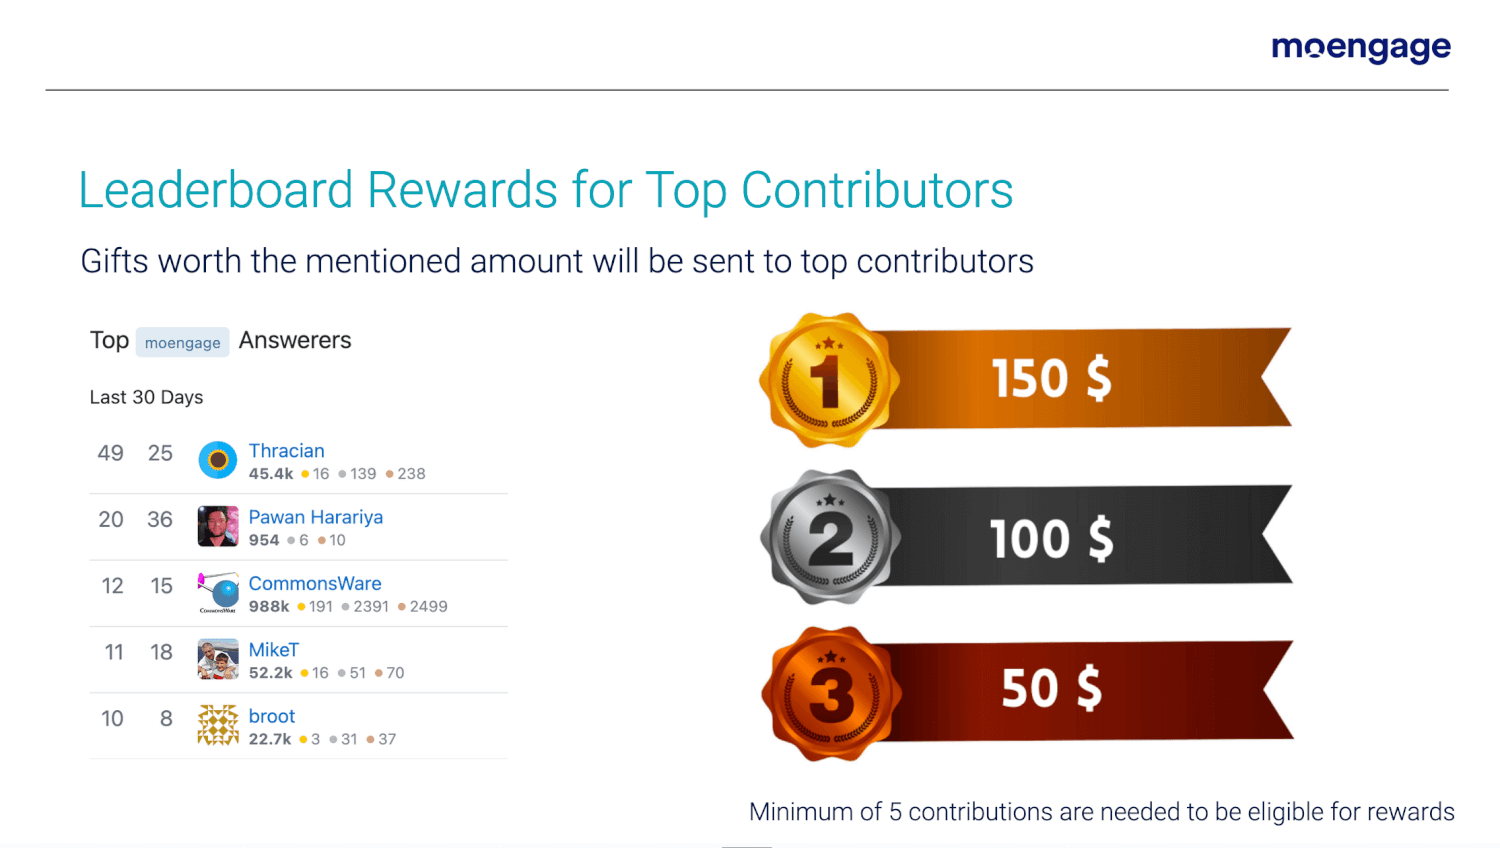 Leaderboard rewards for The MoEngage Developer Community